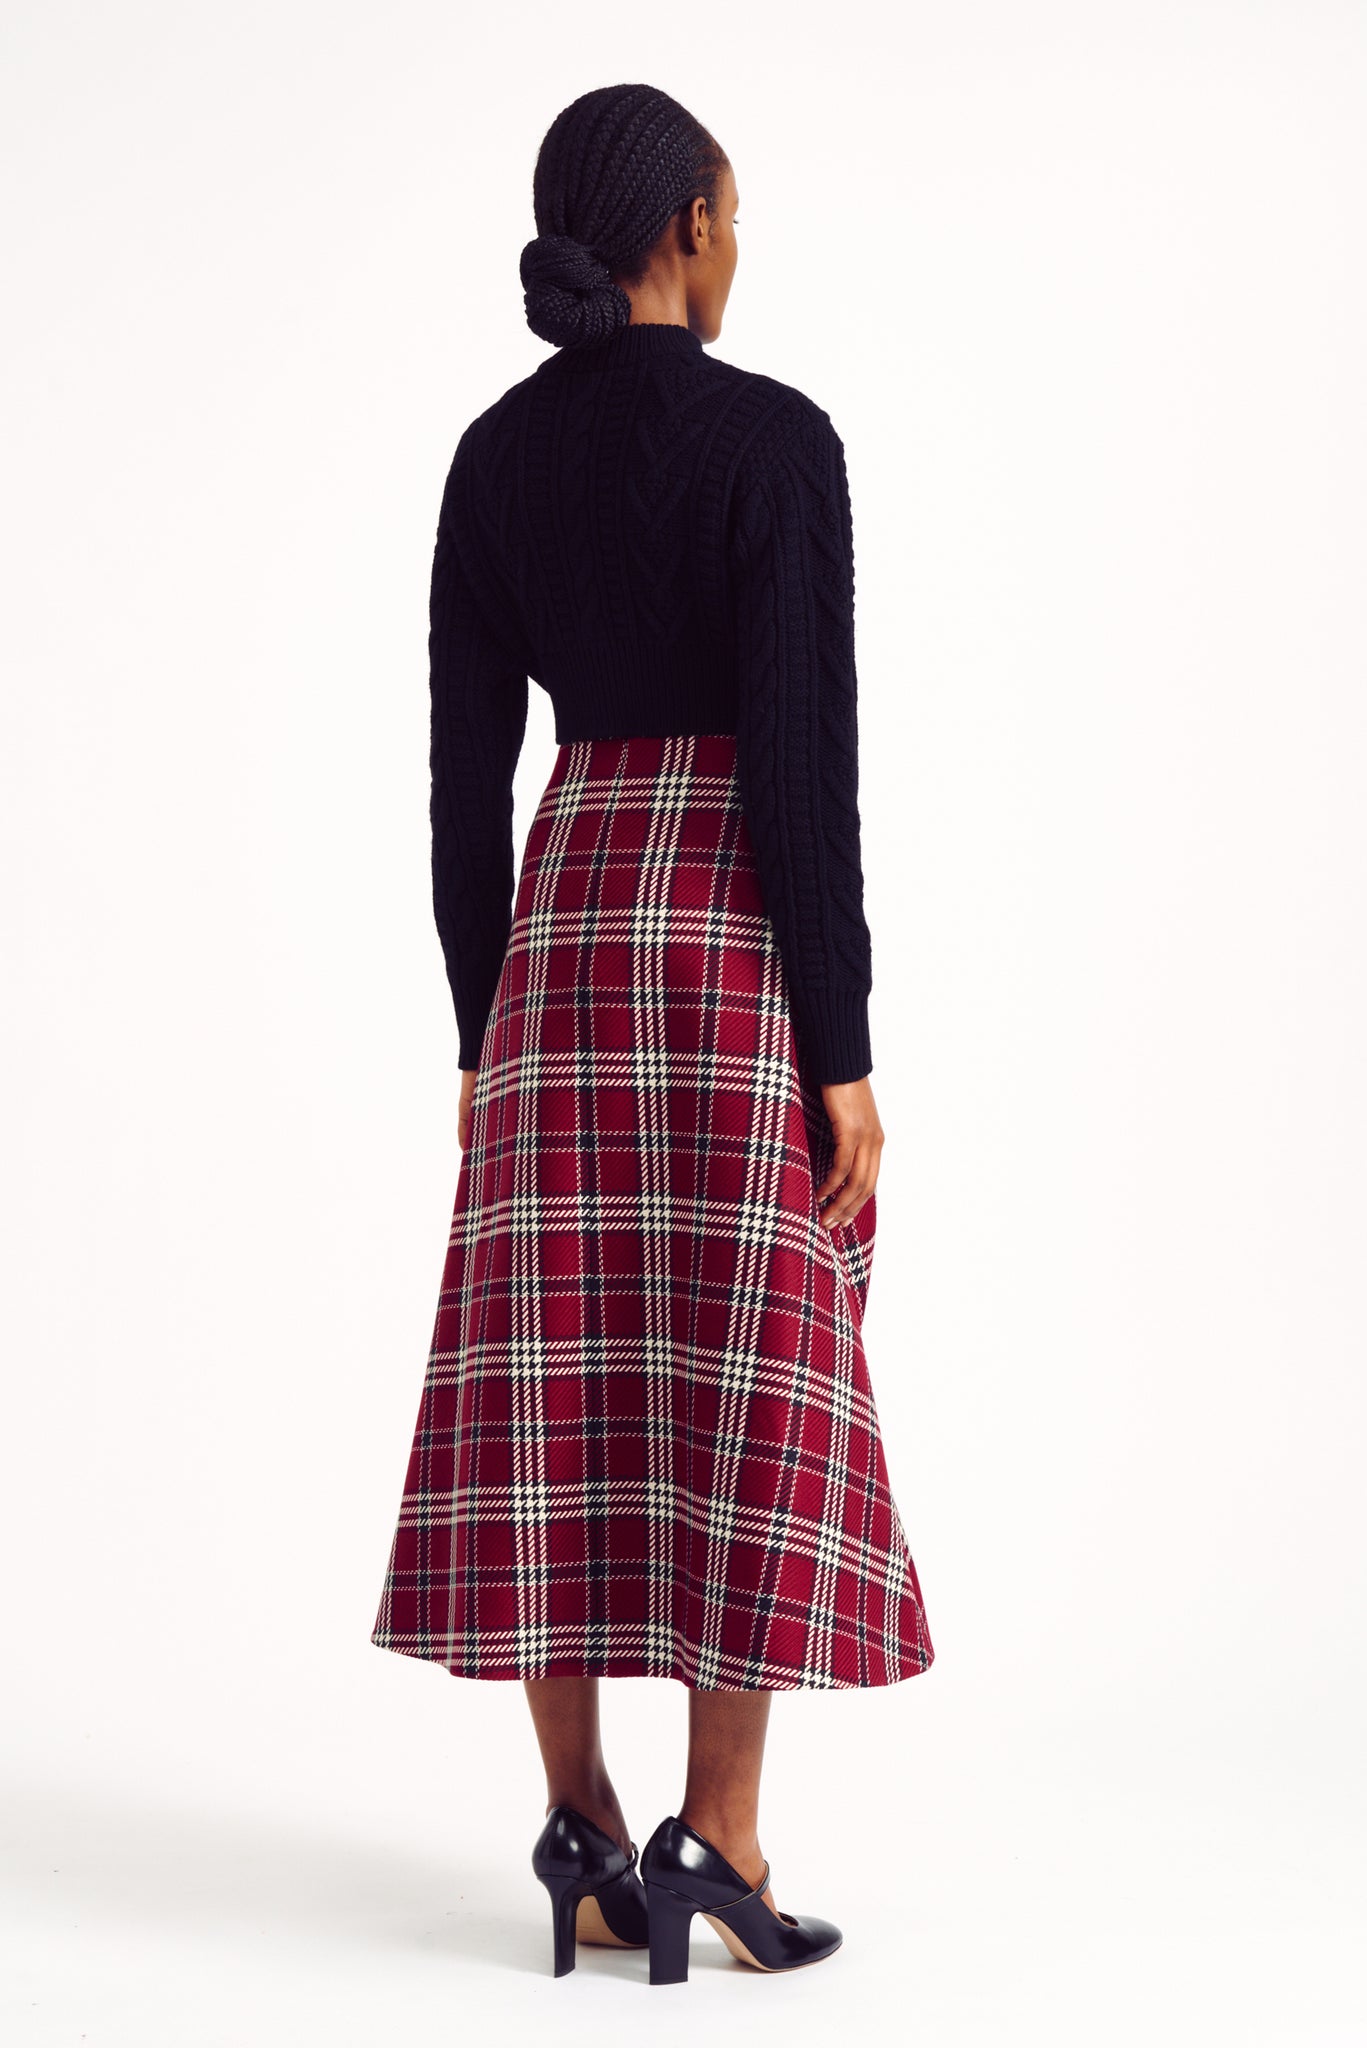 Tora Skirt in Maroon Shetland Tartan Check | Emilia Wickstead